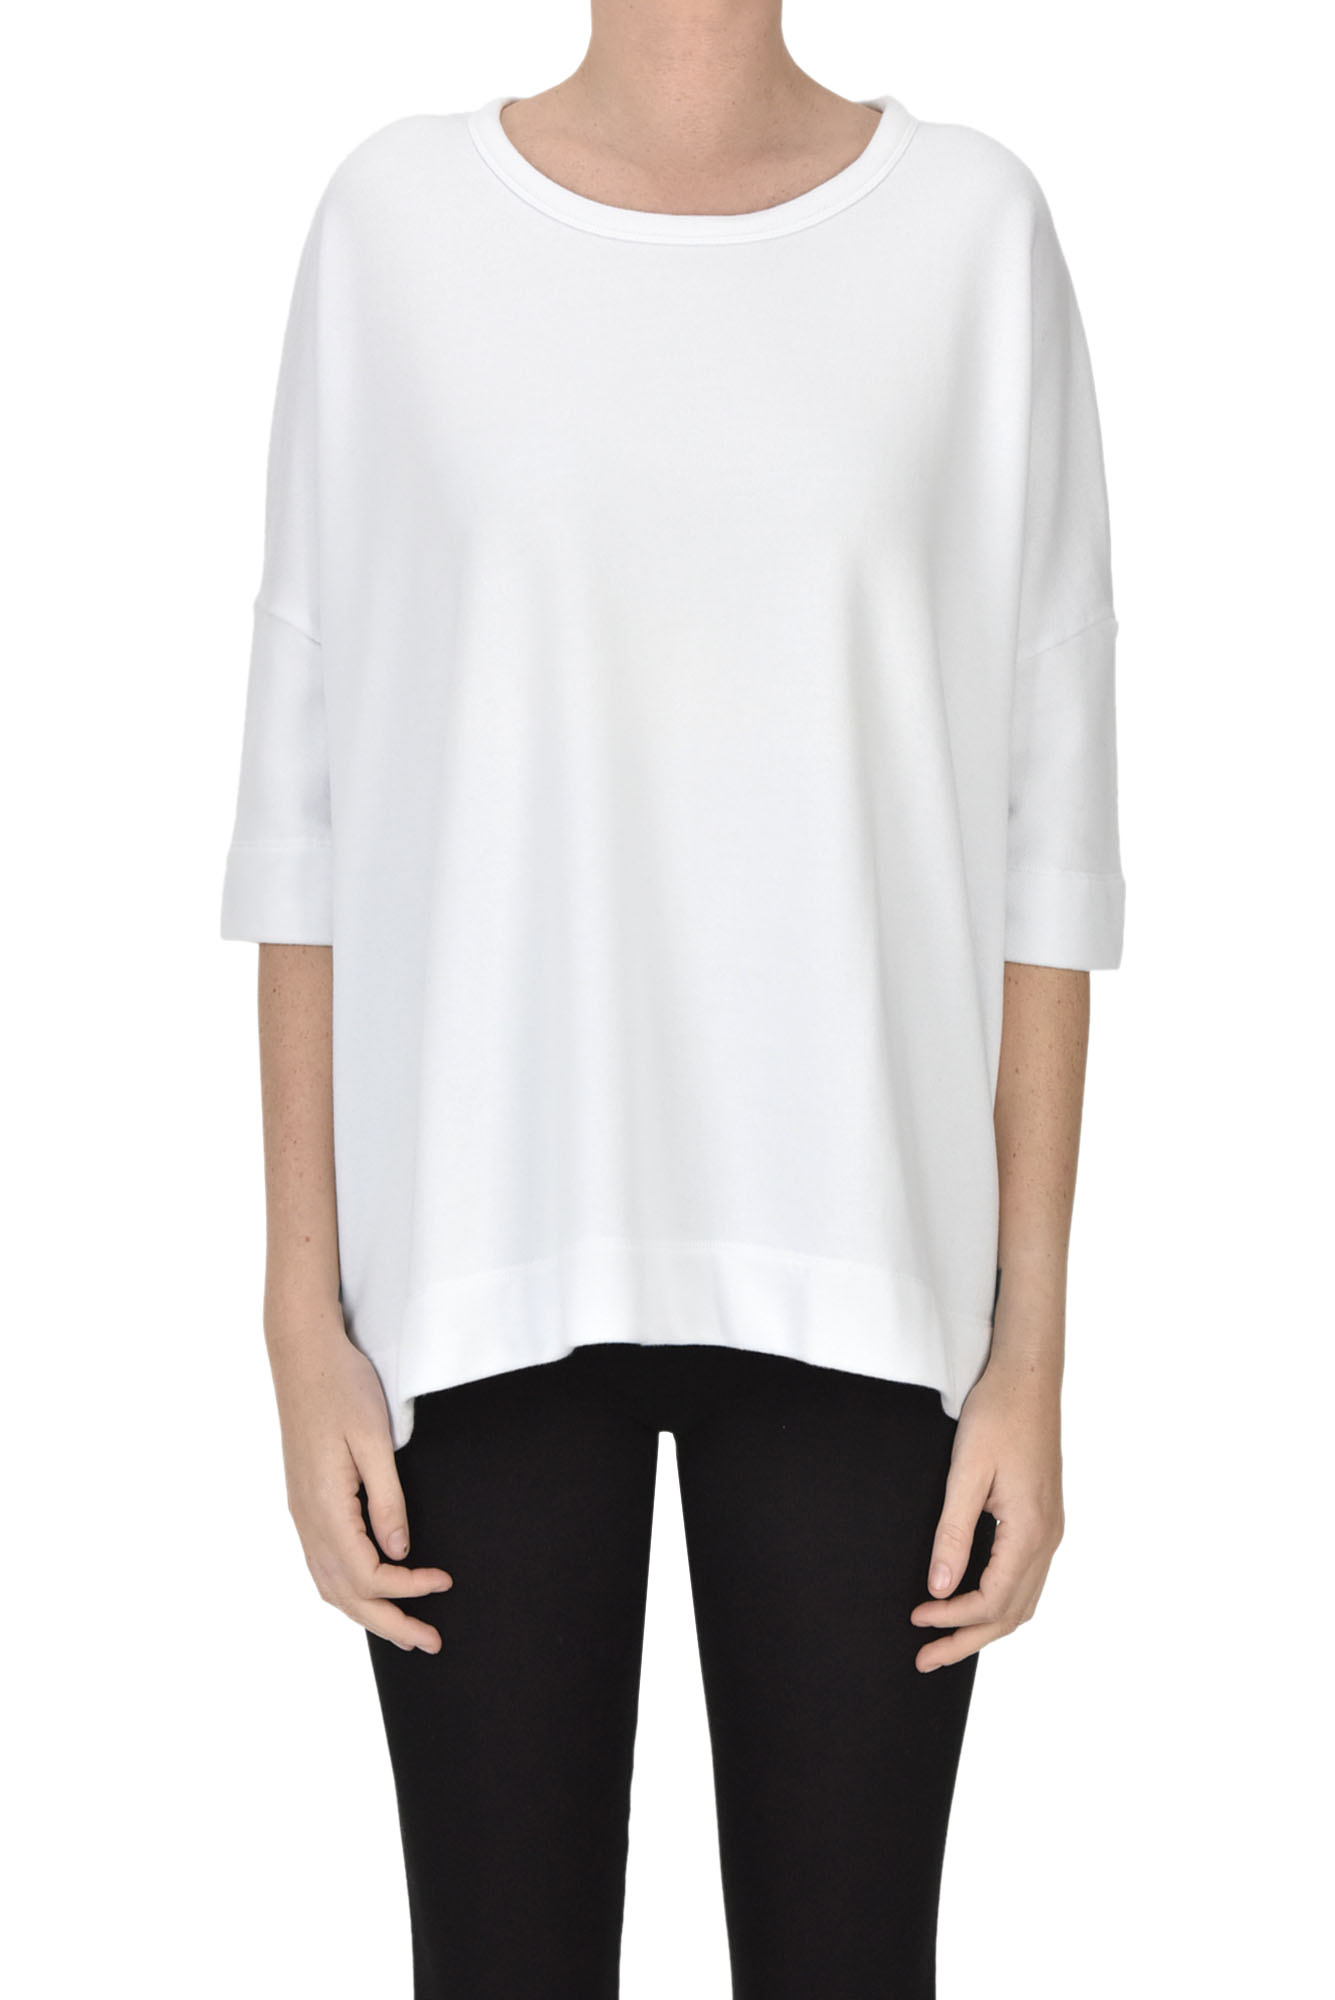 Bonneterie Universel Short Sleeves Sweatshirt In White